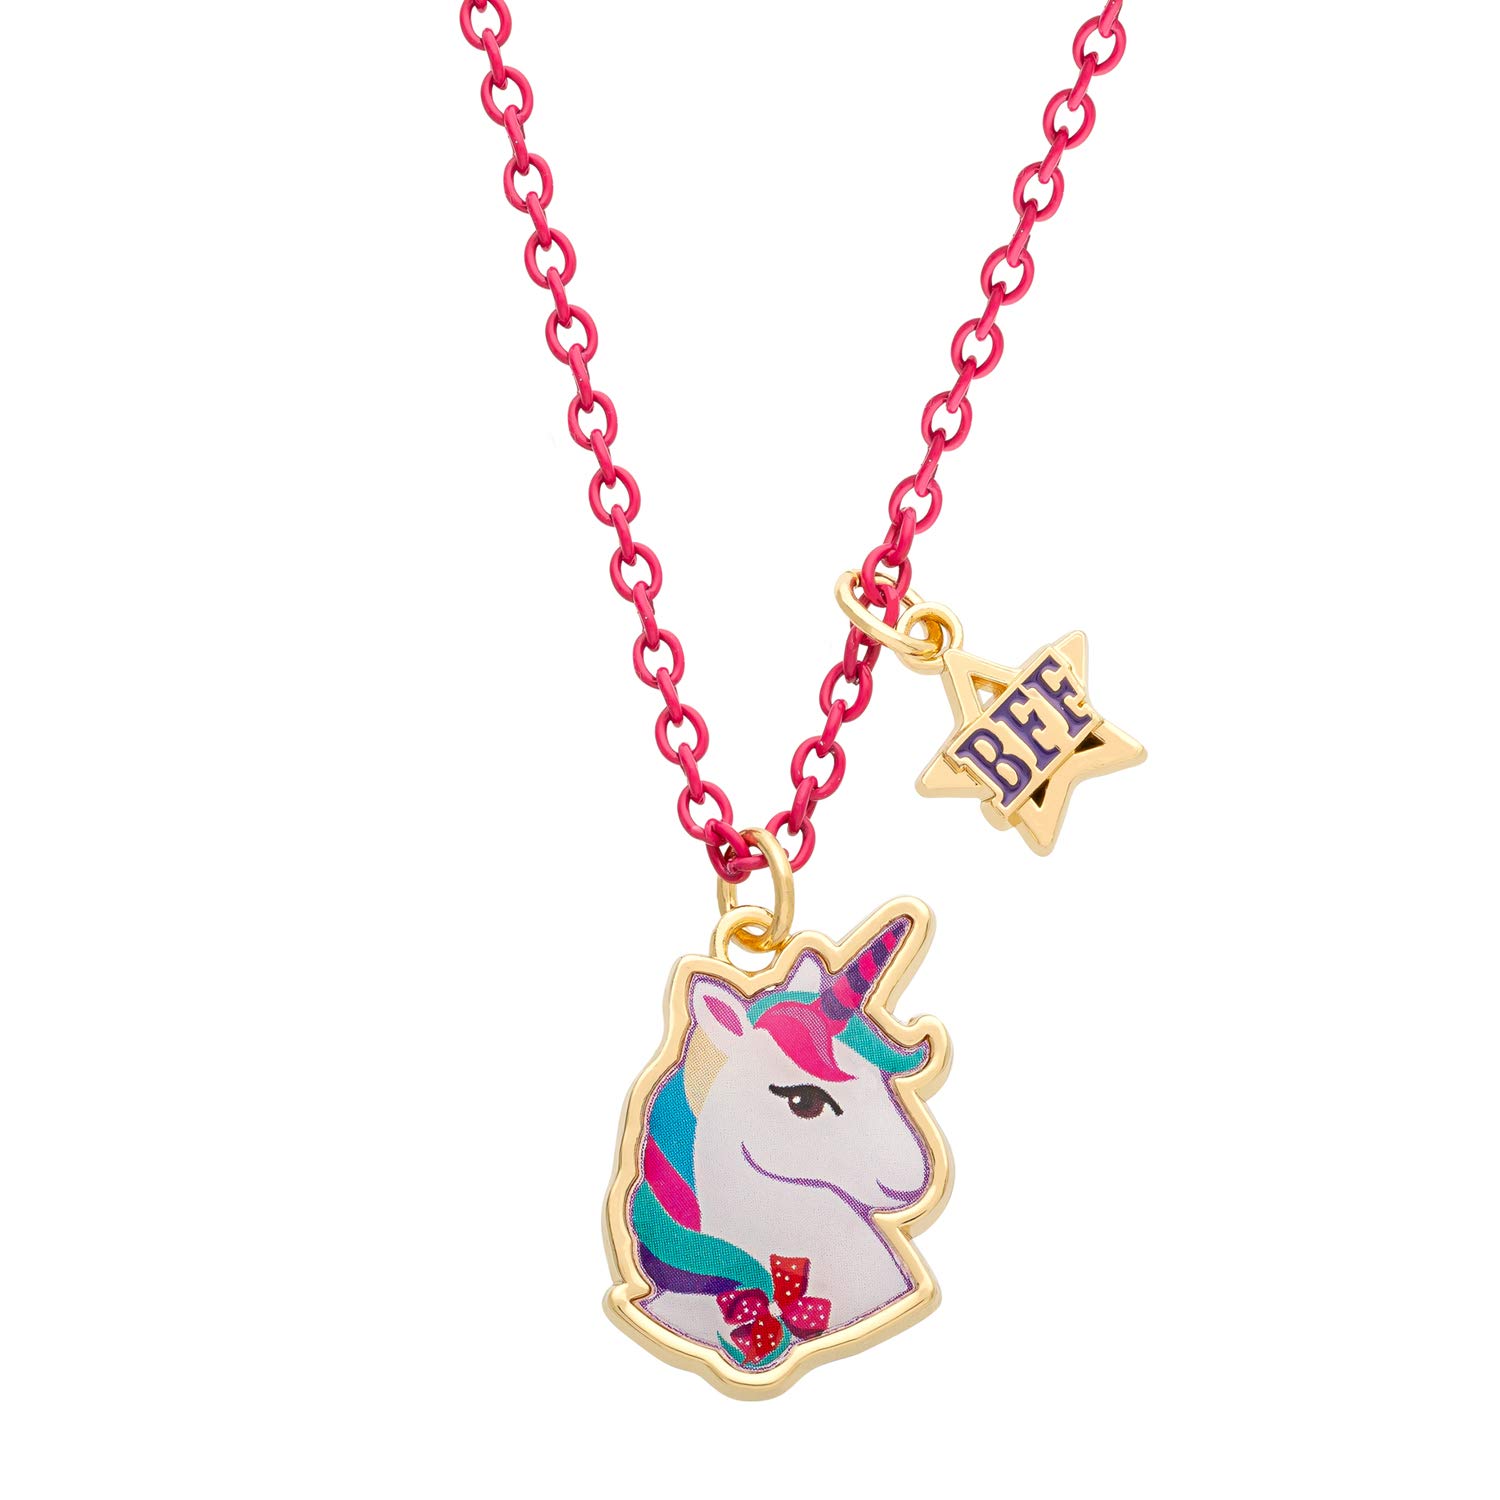 JoJo Siwa Girls Jewelry Set Necklace, BFF Necklace, Earrings, or Bracelet Set - Official License